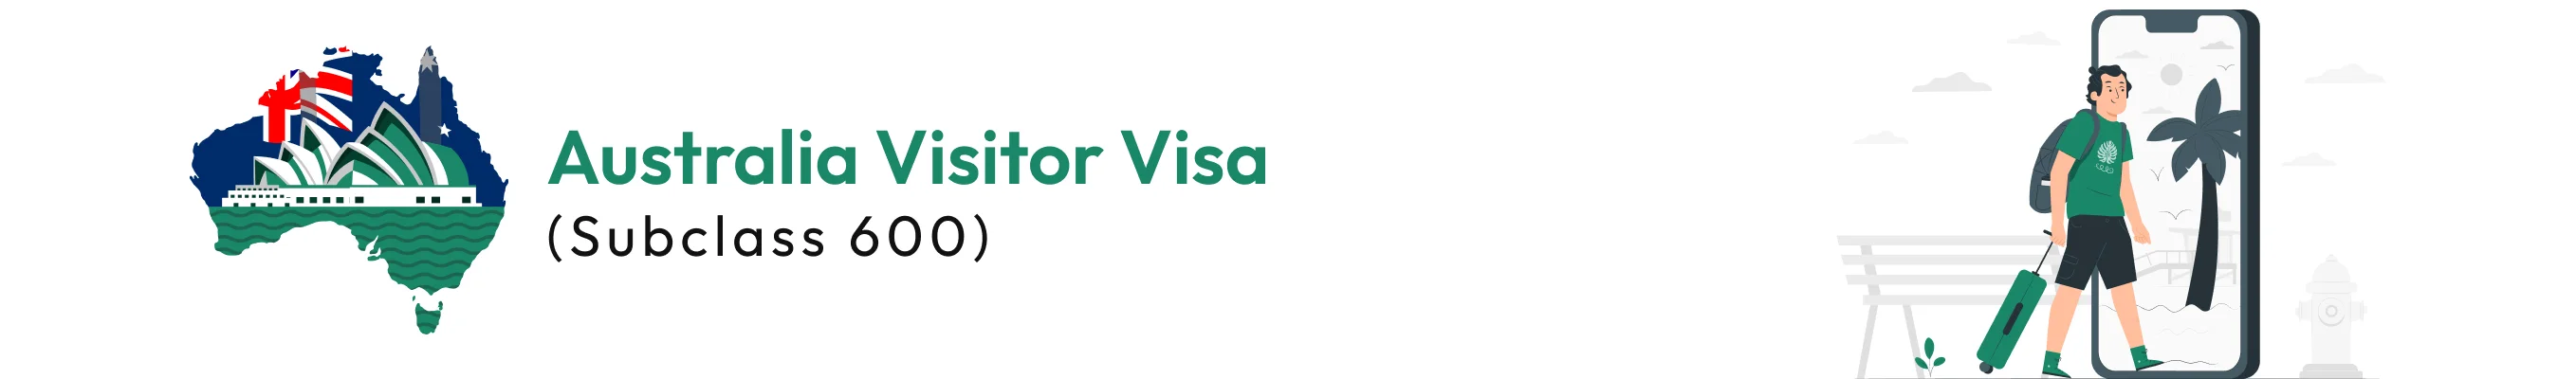 australia-visitor-visa-subclass-600.webp